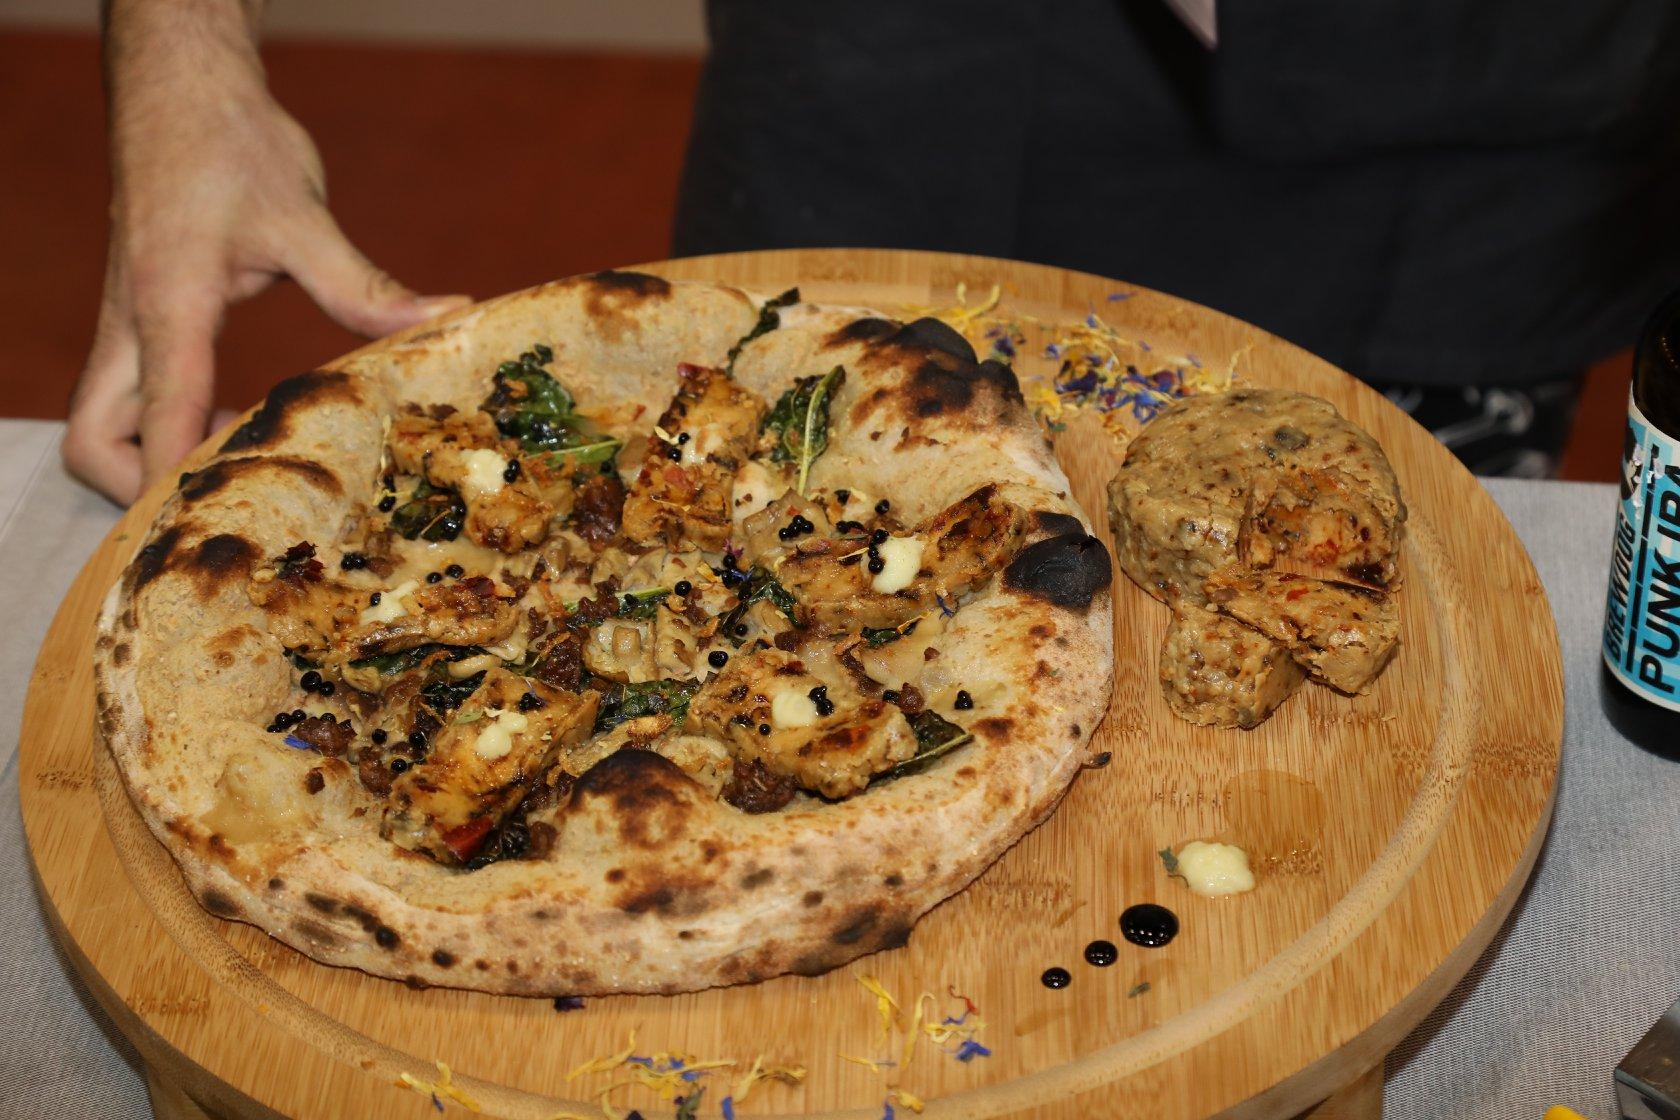 The winning pizza was made using BrewDog Punk IPA-infused whole grain dough (Purezza)